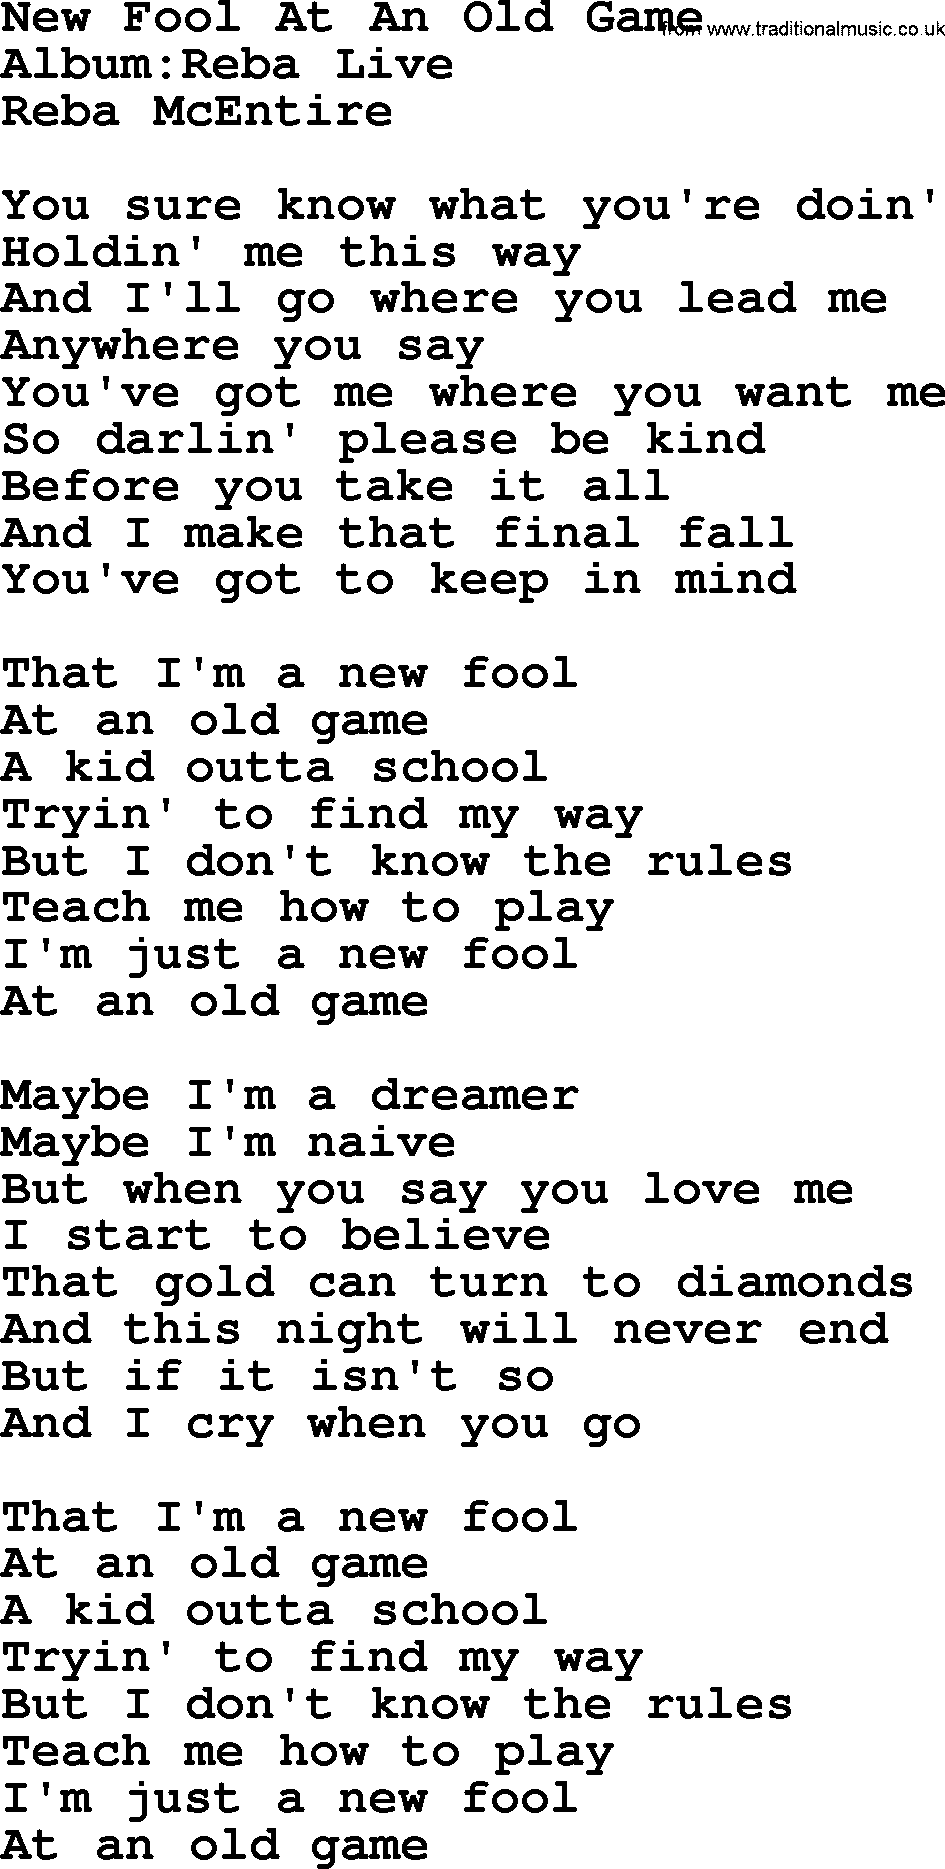 Reba McEntire song: New Fool At An Old Game lyrics